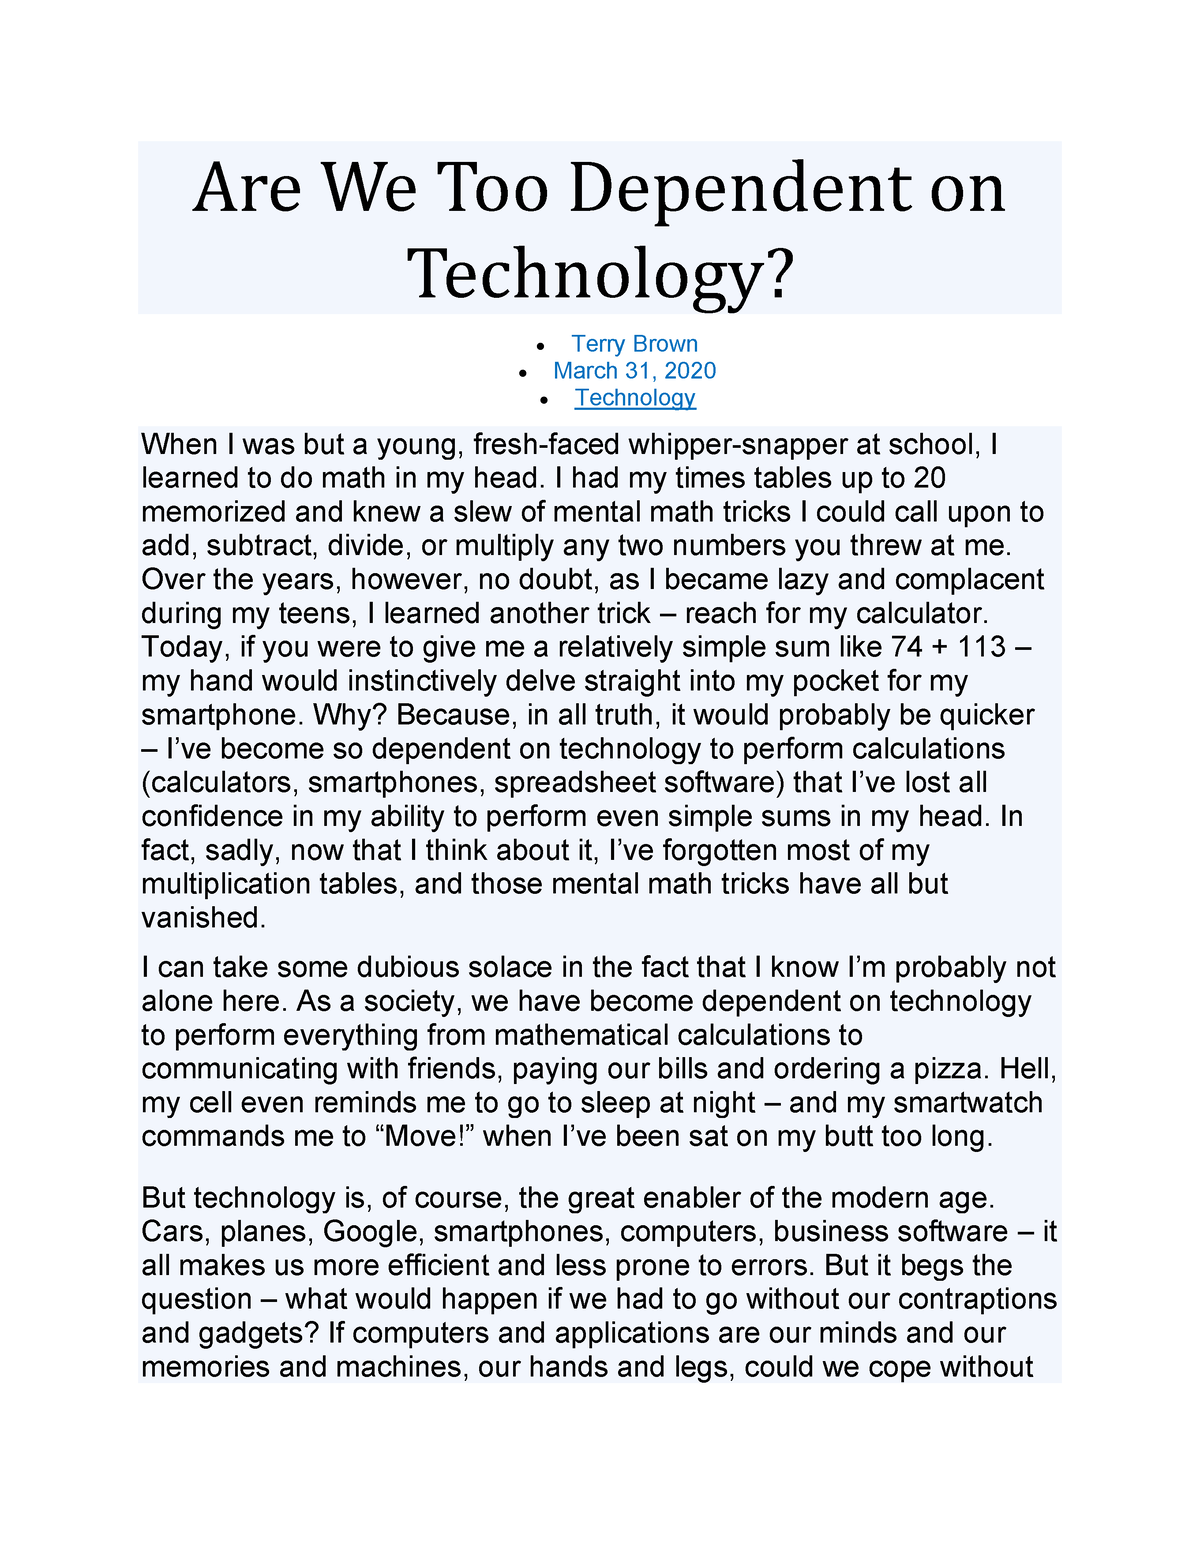 dependent on technology essay